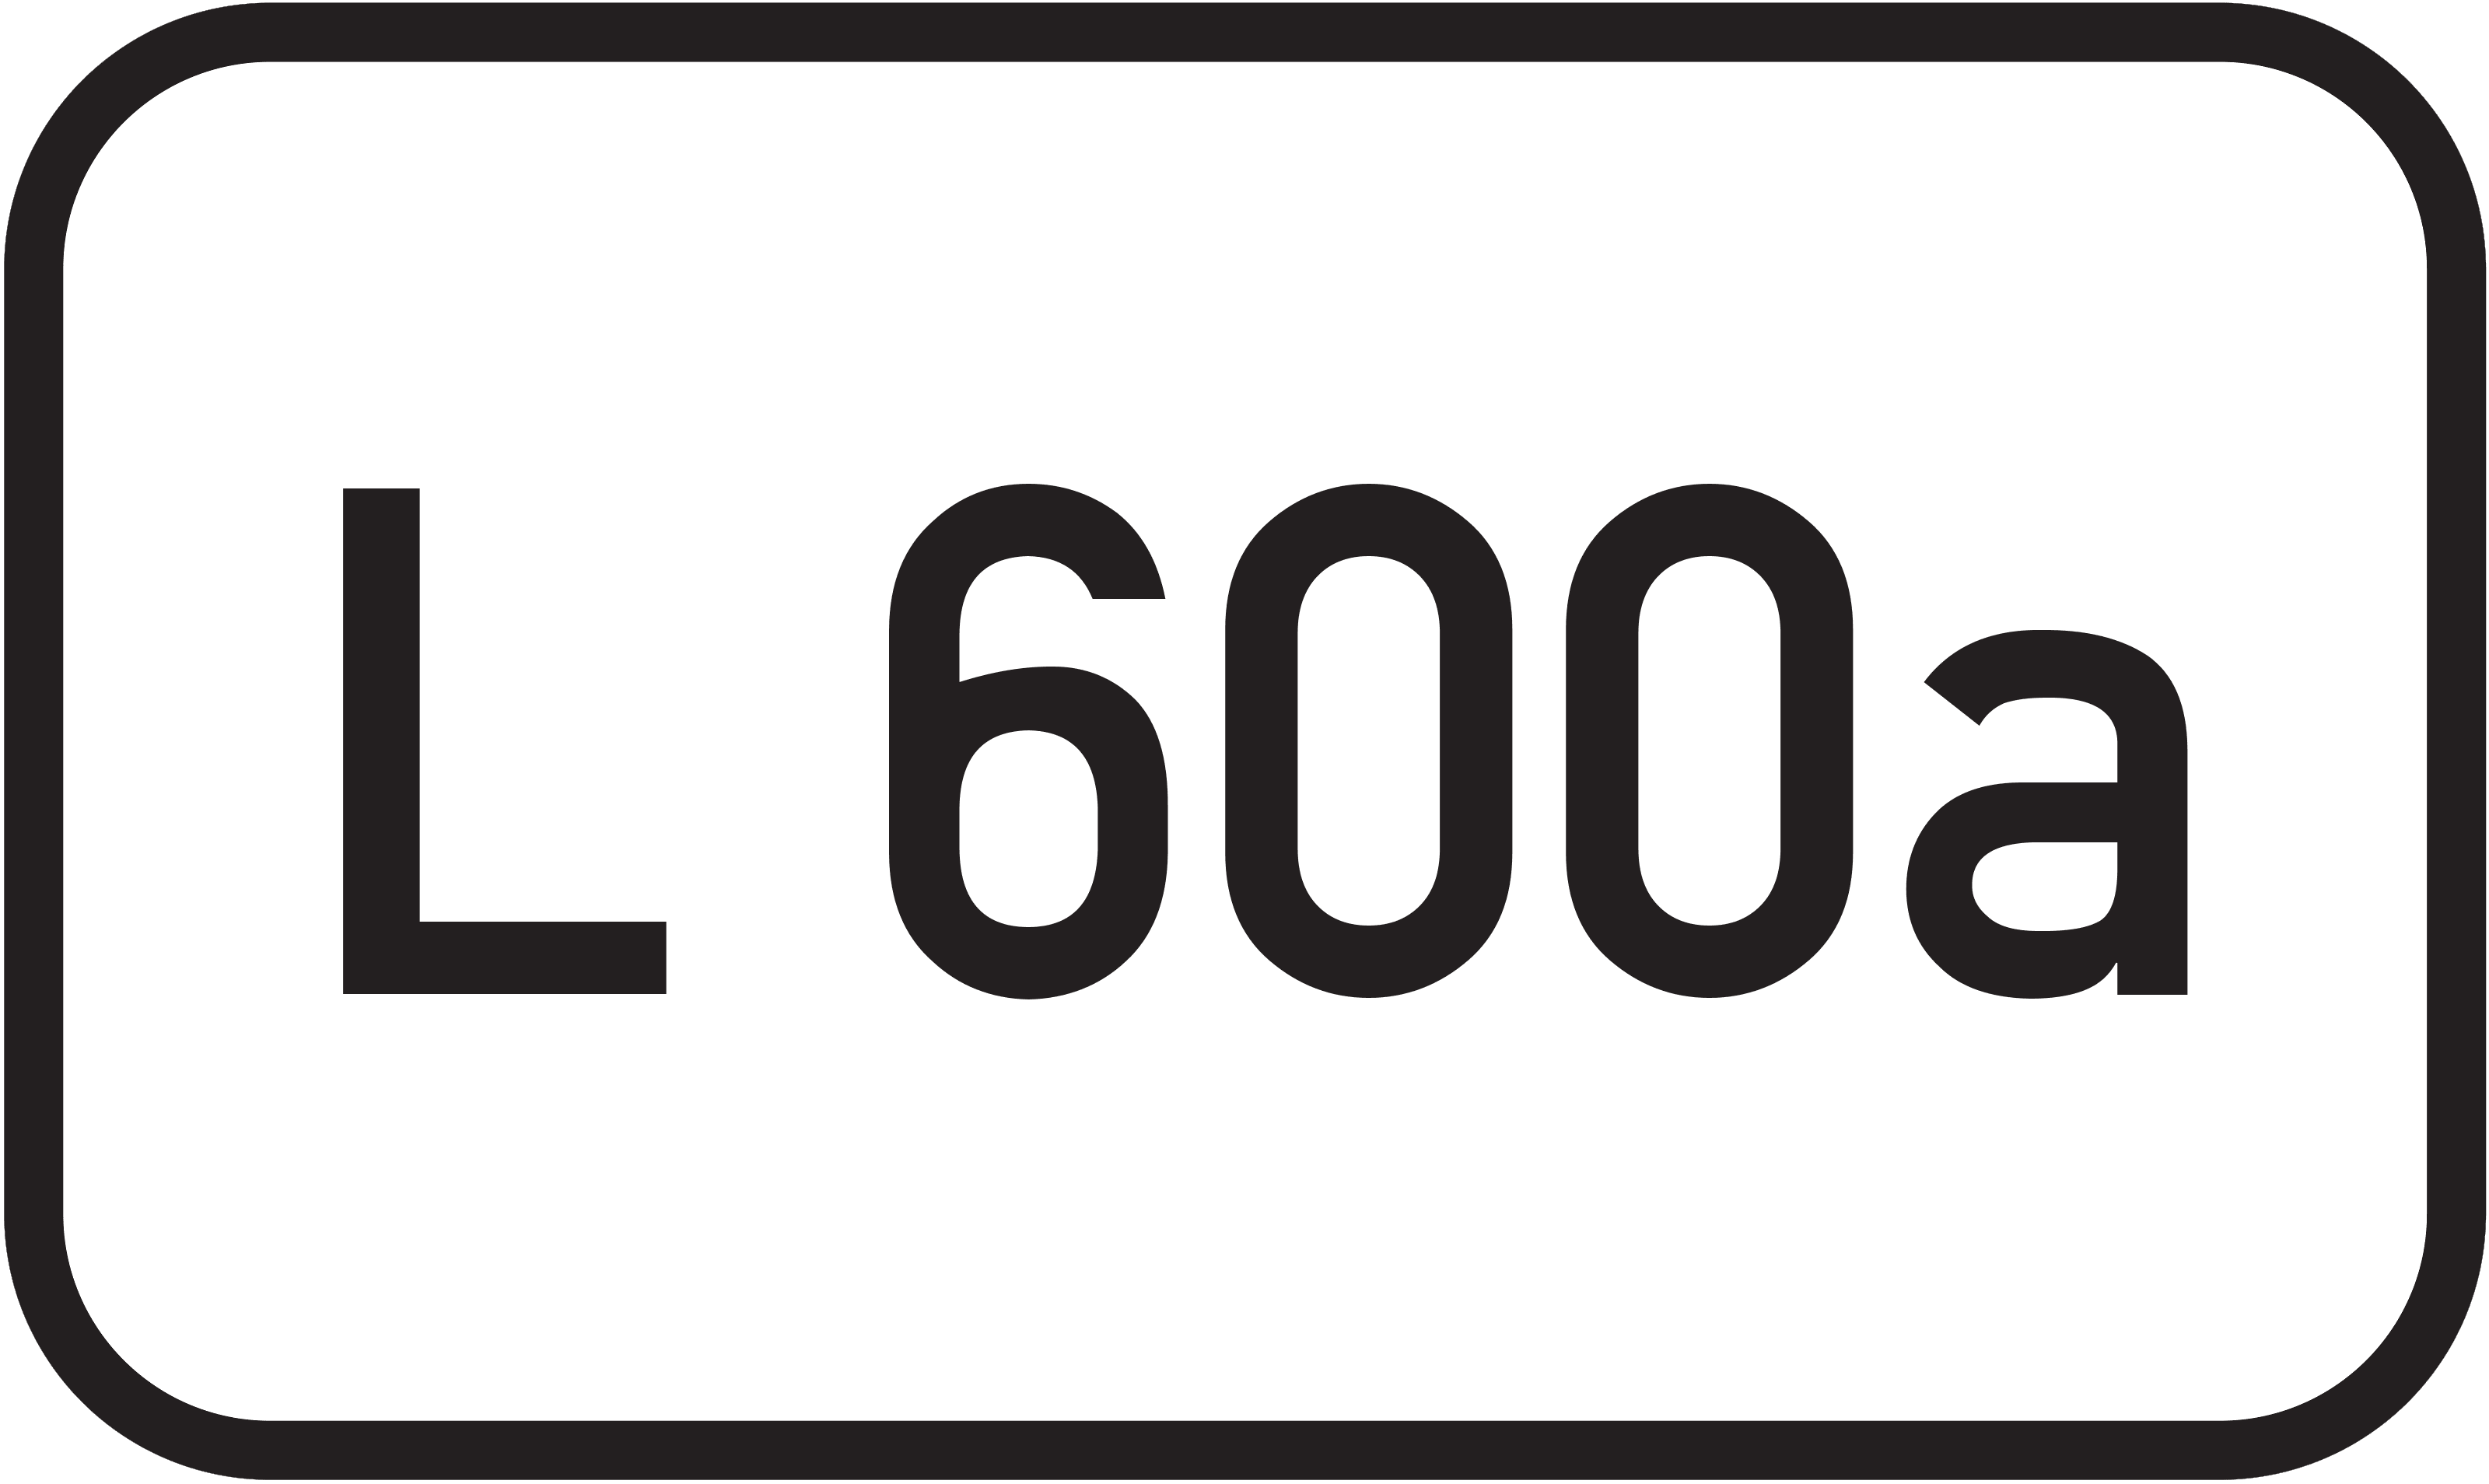 Landesstraße L 600a